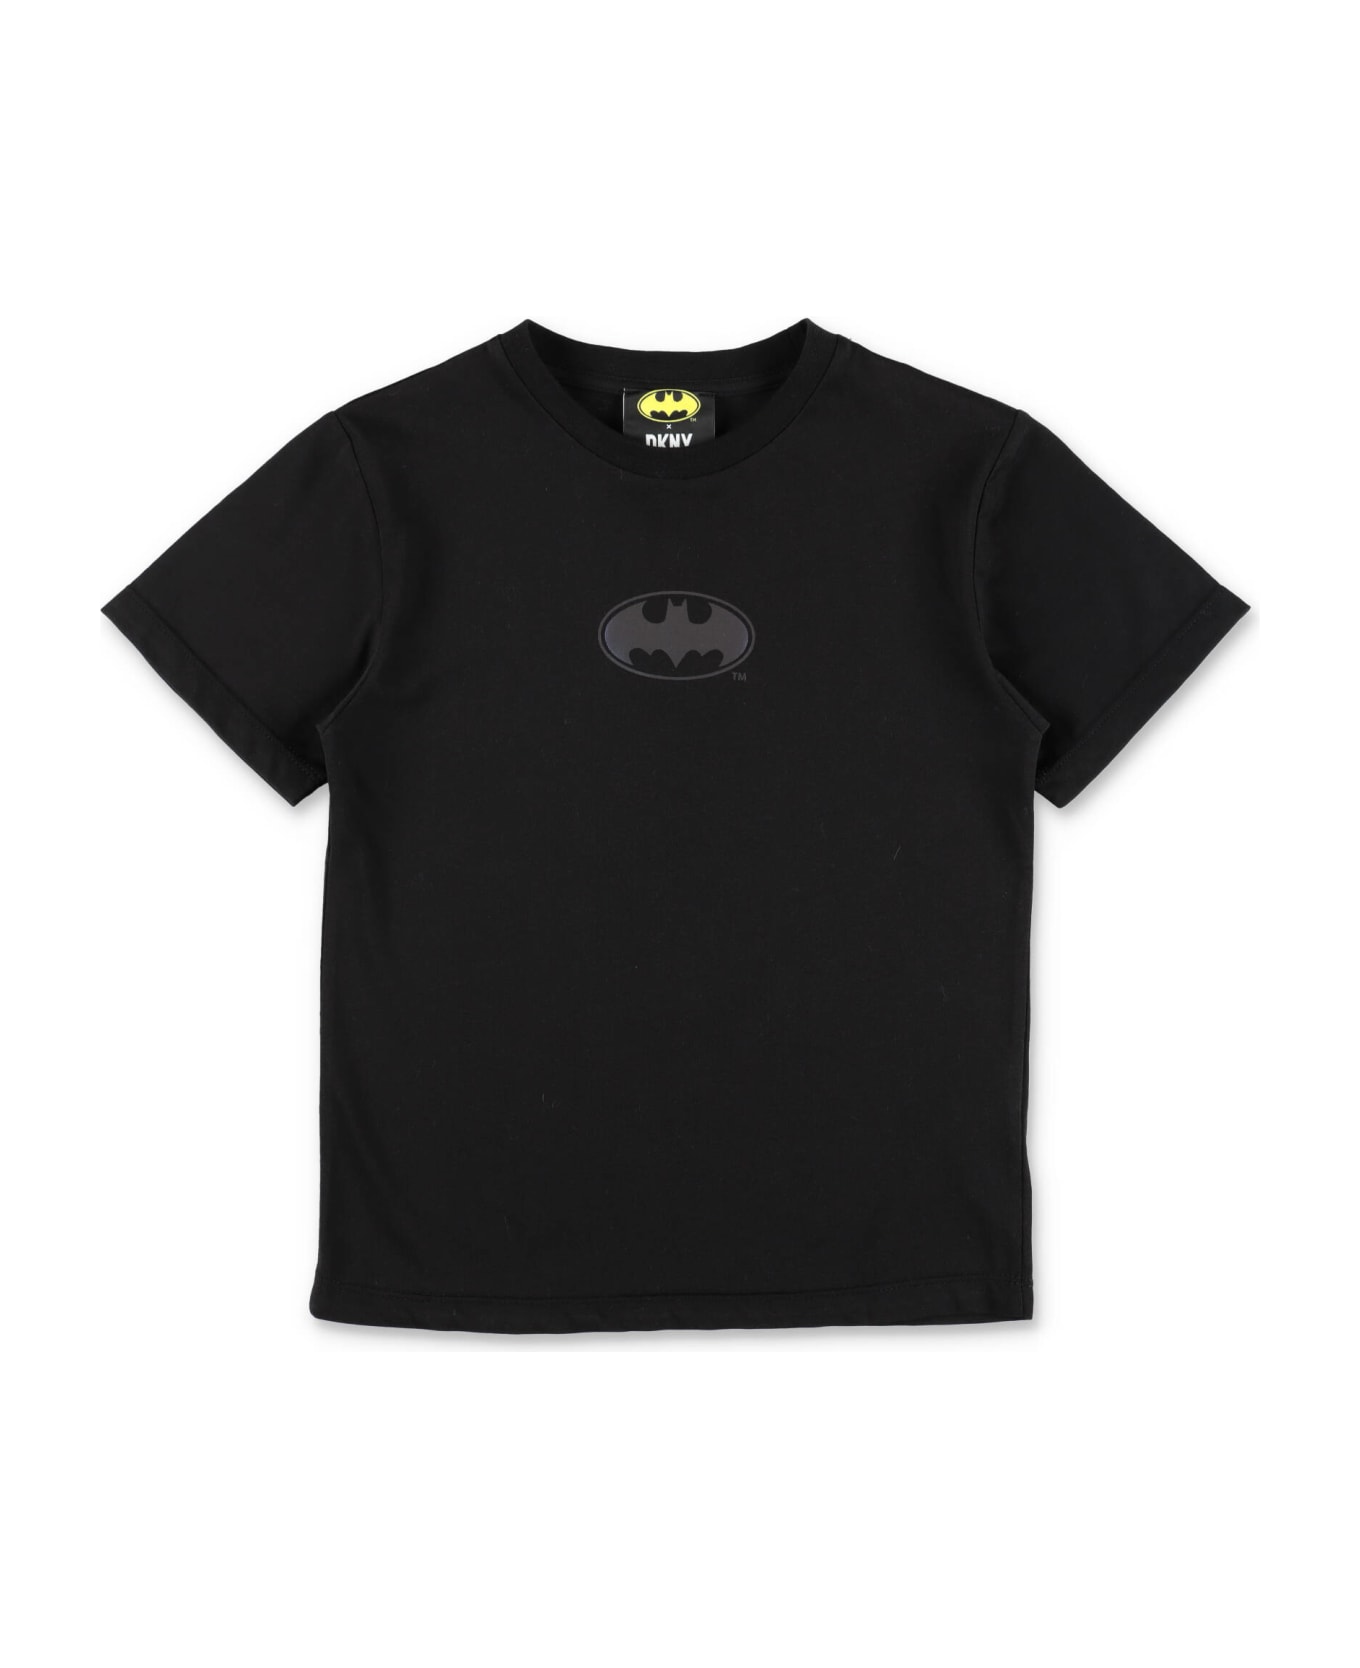 DKNY X Batman T-shirt Nera In Jersey Di Cotone Bambino - Nero Tシャツ＆ポロシャツ